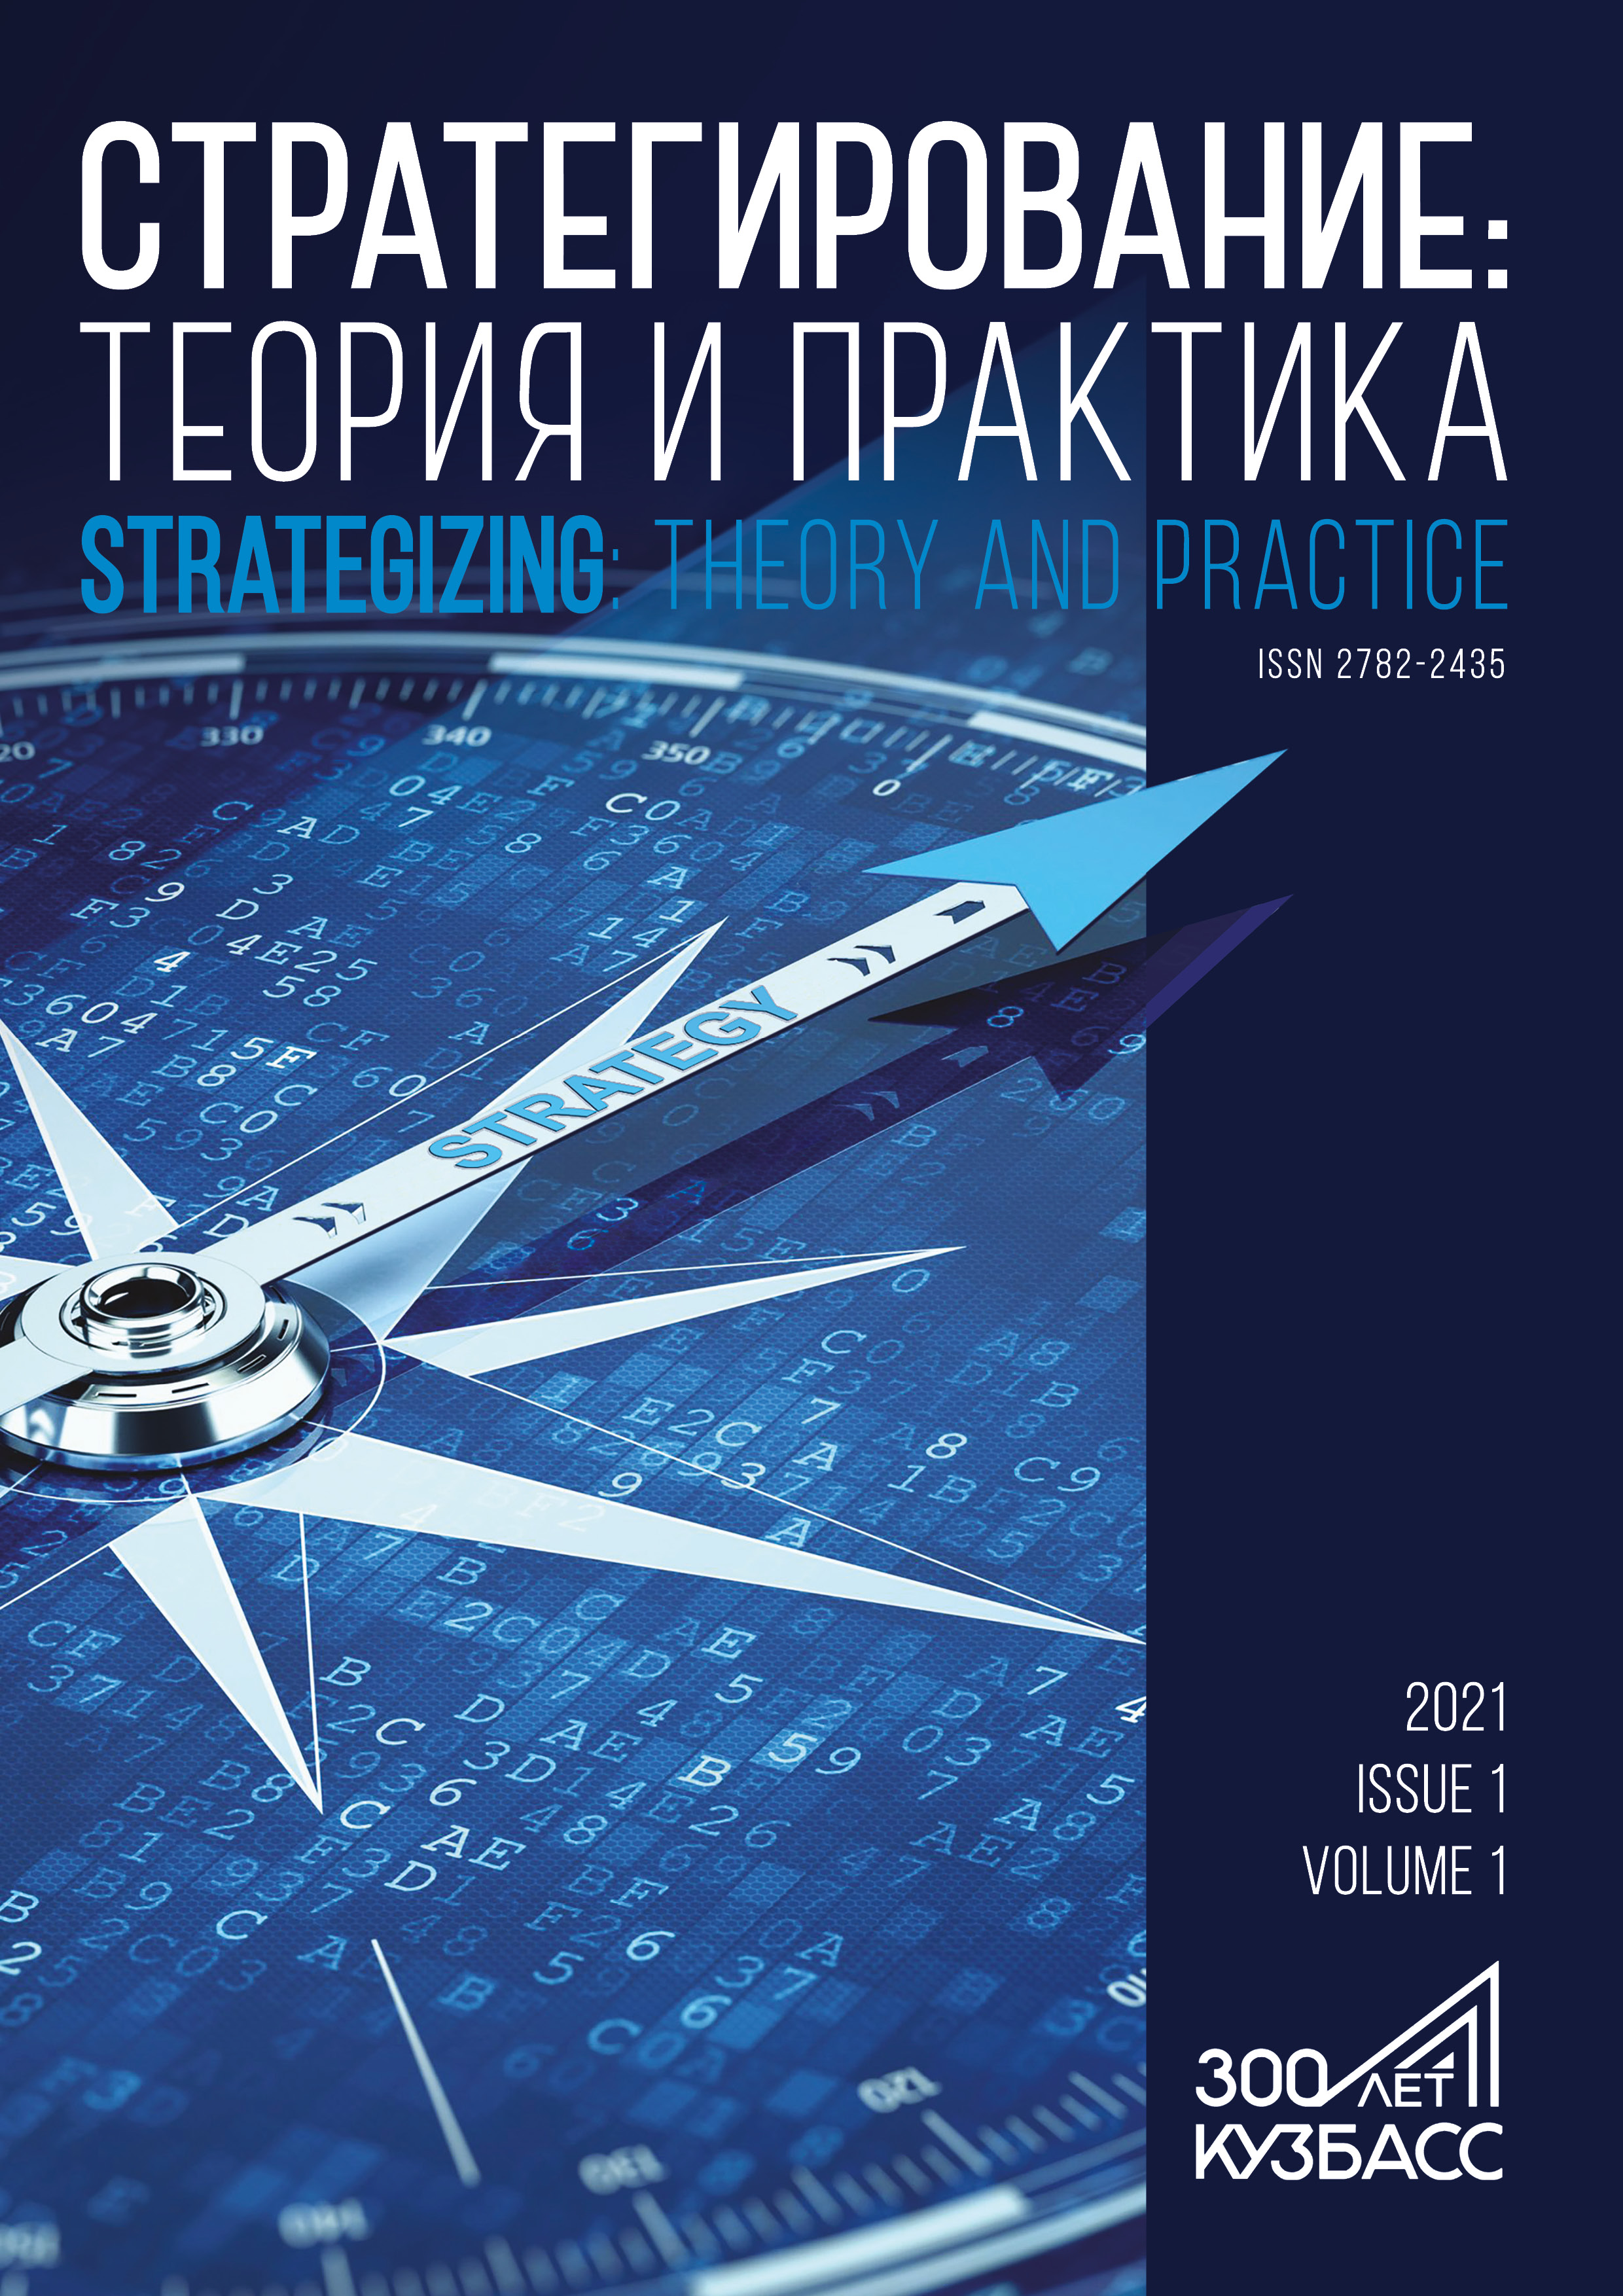                         Kuzbass Strategy over 50-year Planning Horizon: Publications on Strategy of the Kuzbass Region
            